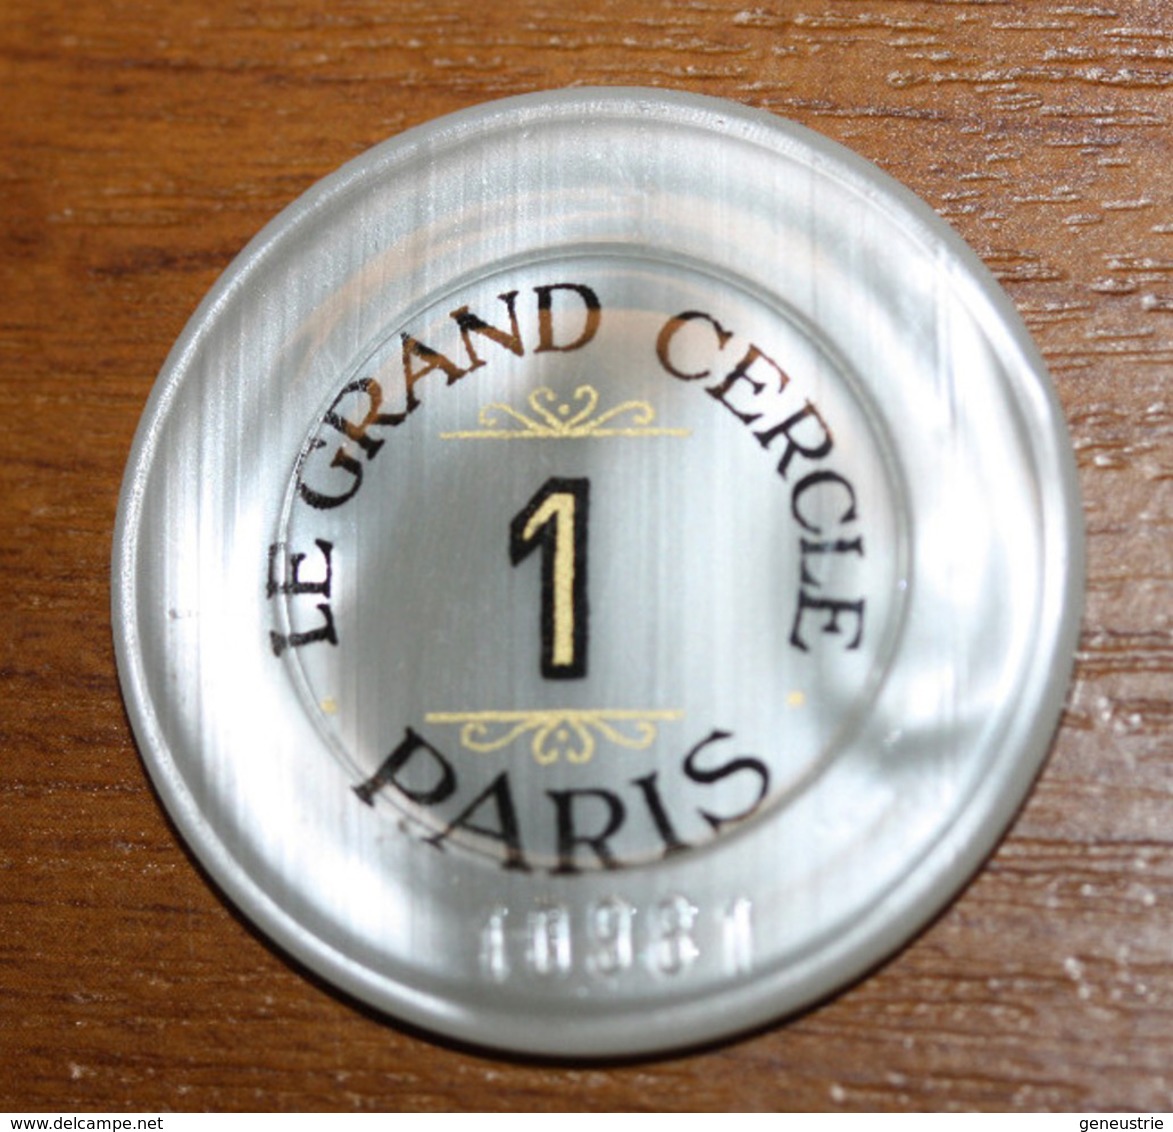 Rare Jeton De 1 Franc "Le Grand Cercle - Paris" Casino Token - Casino